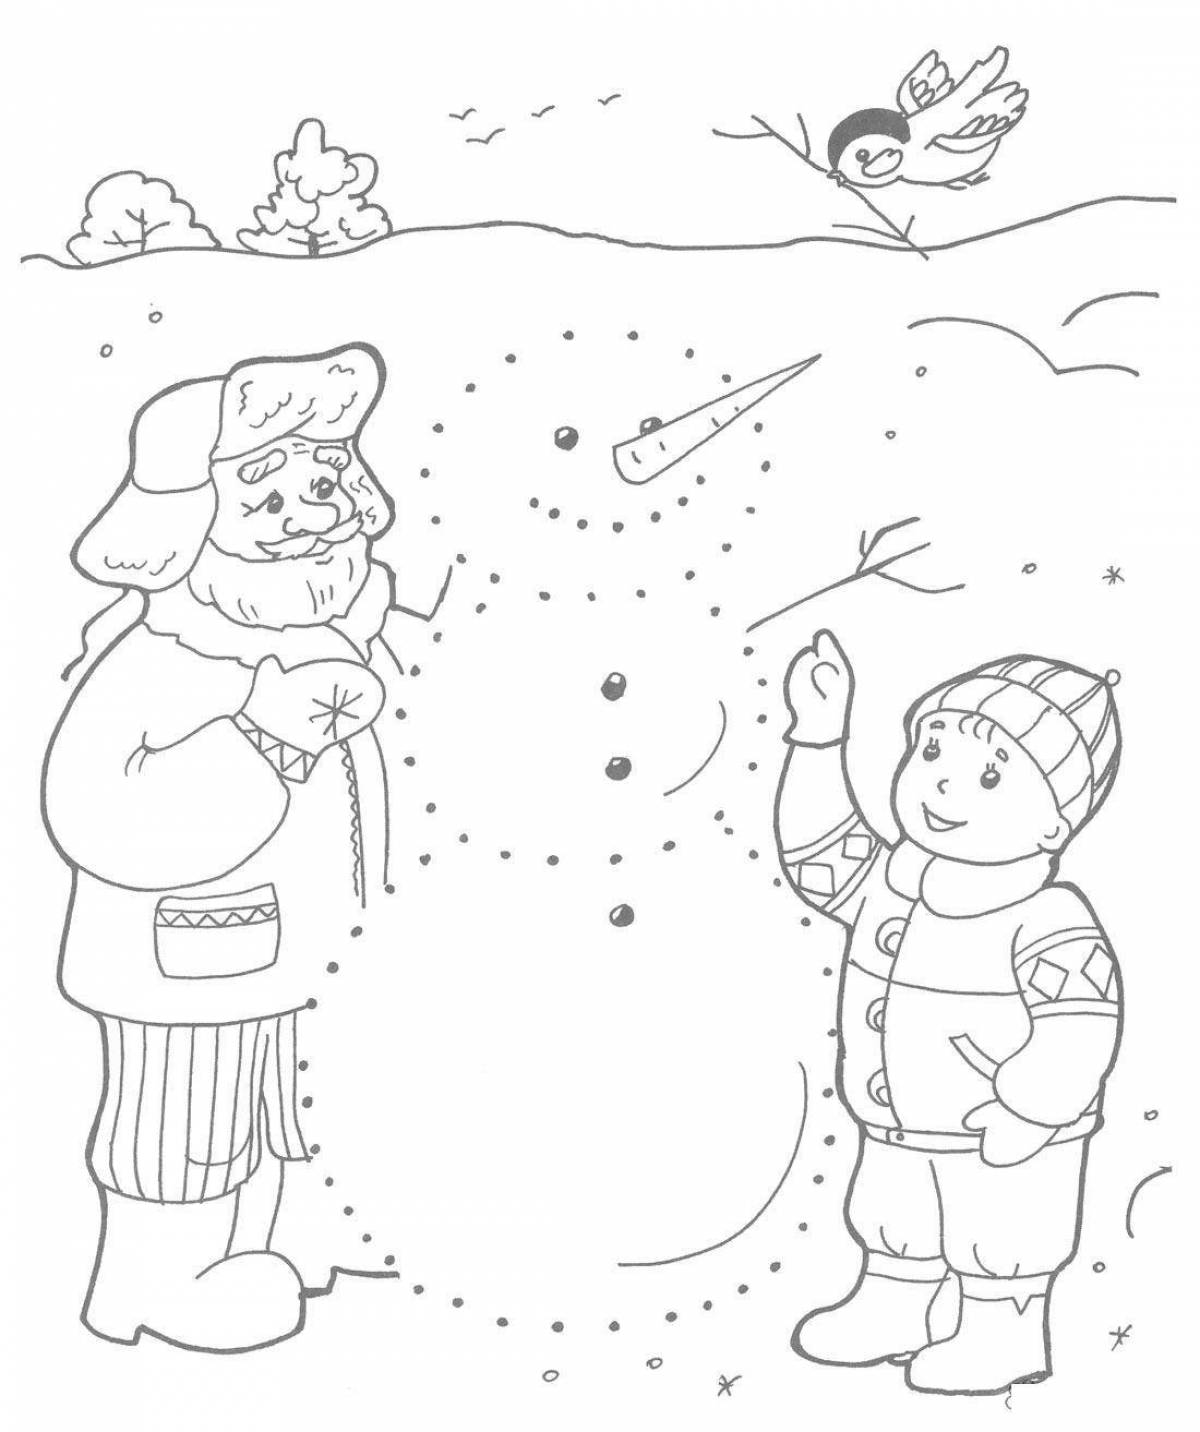 Забавная раскраска для детей зимние забавы 5-6 лет